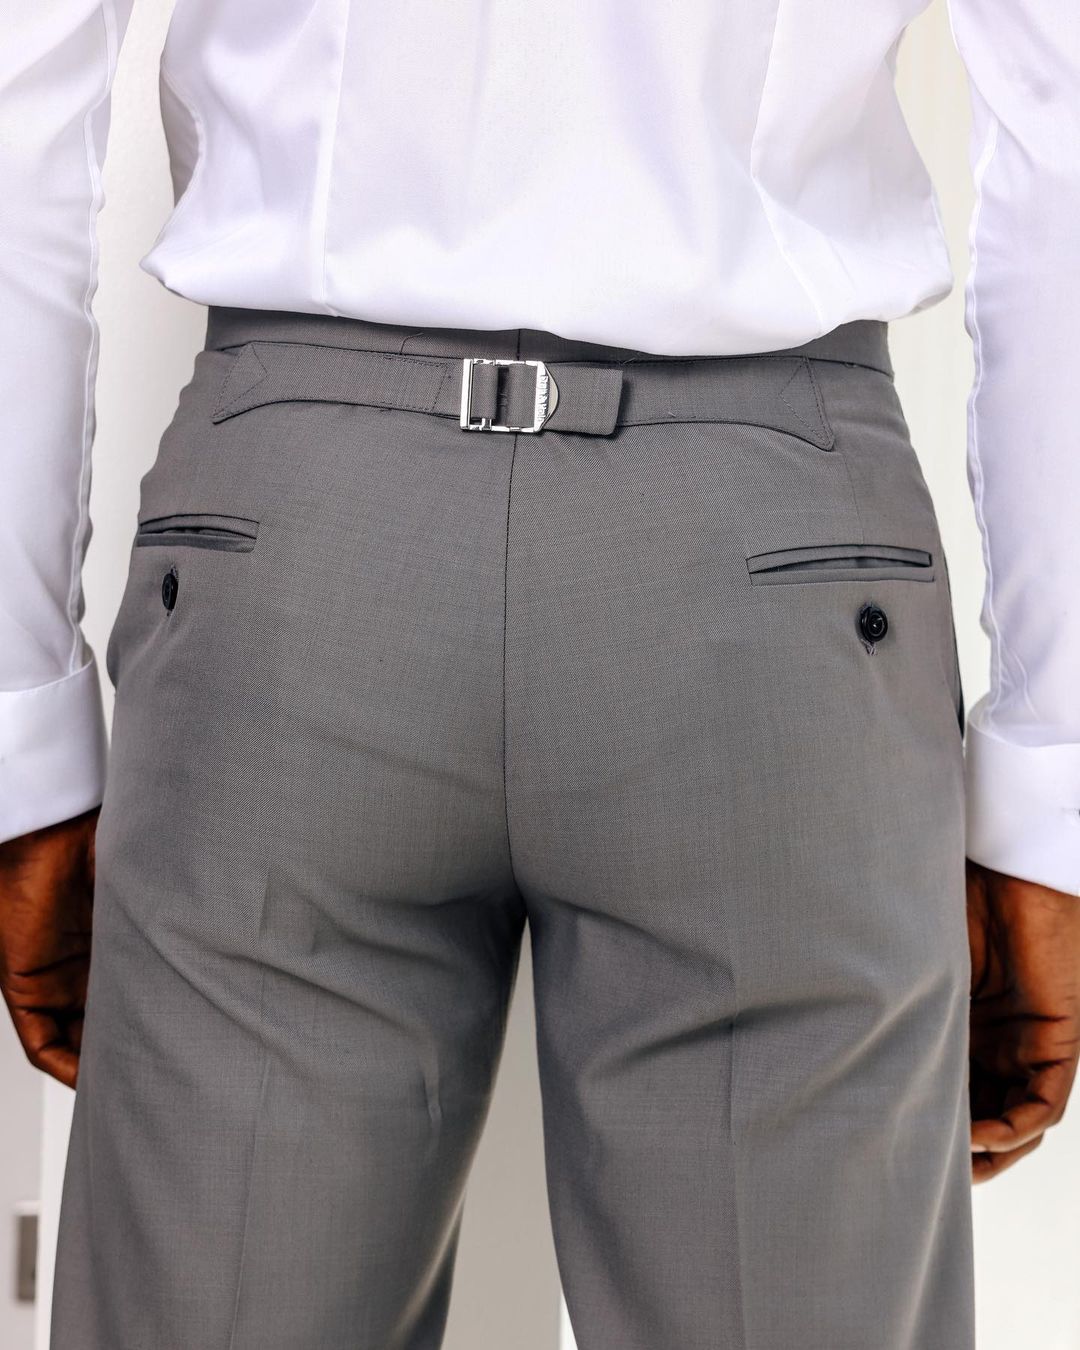 Shop light grey, Gurkha pant with back and side metal adjuster.- Deji ...